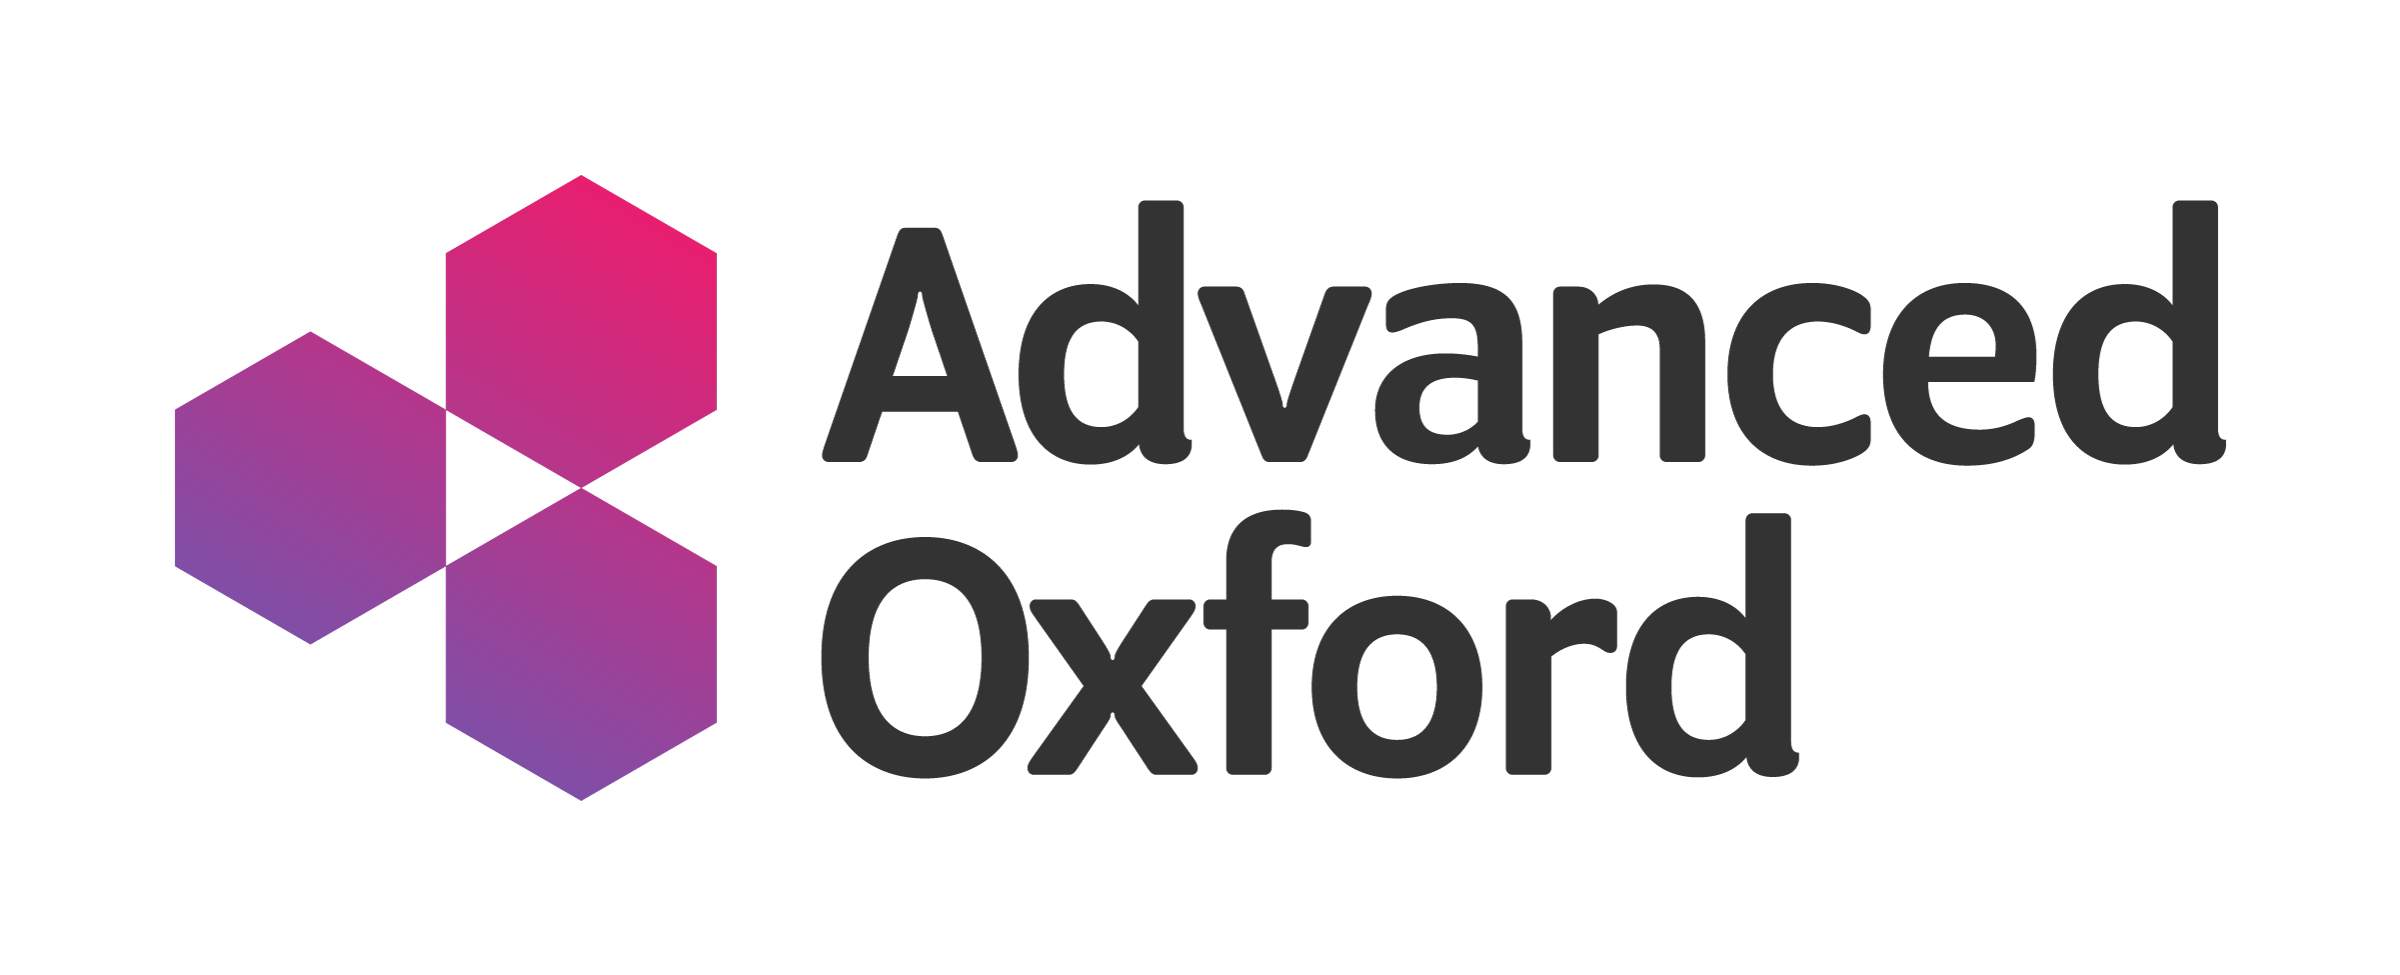 Advanced Oxford logo.jpeg